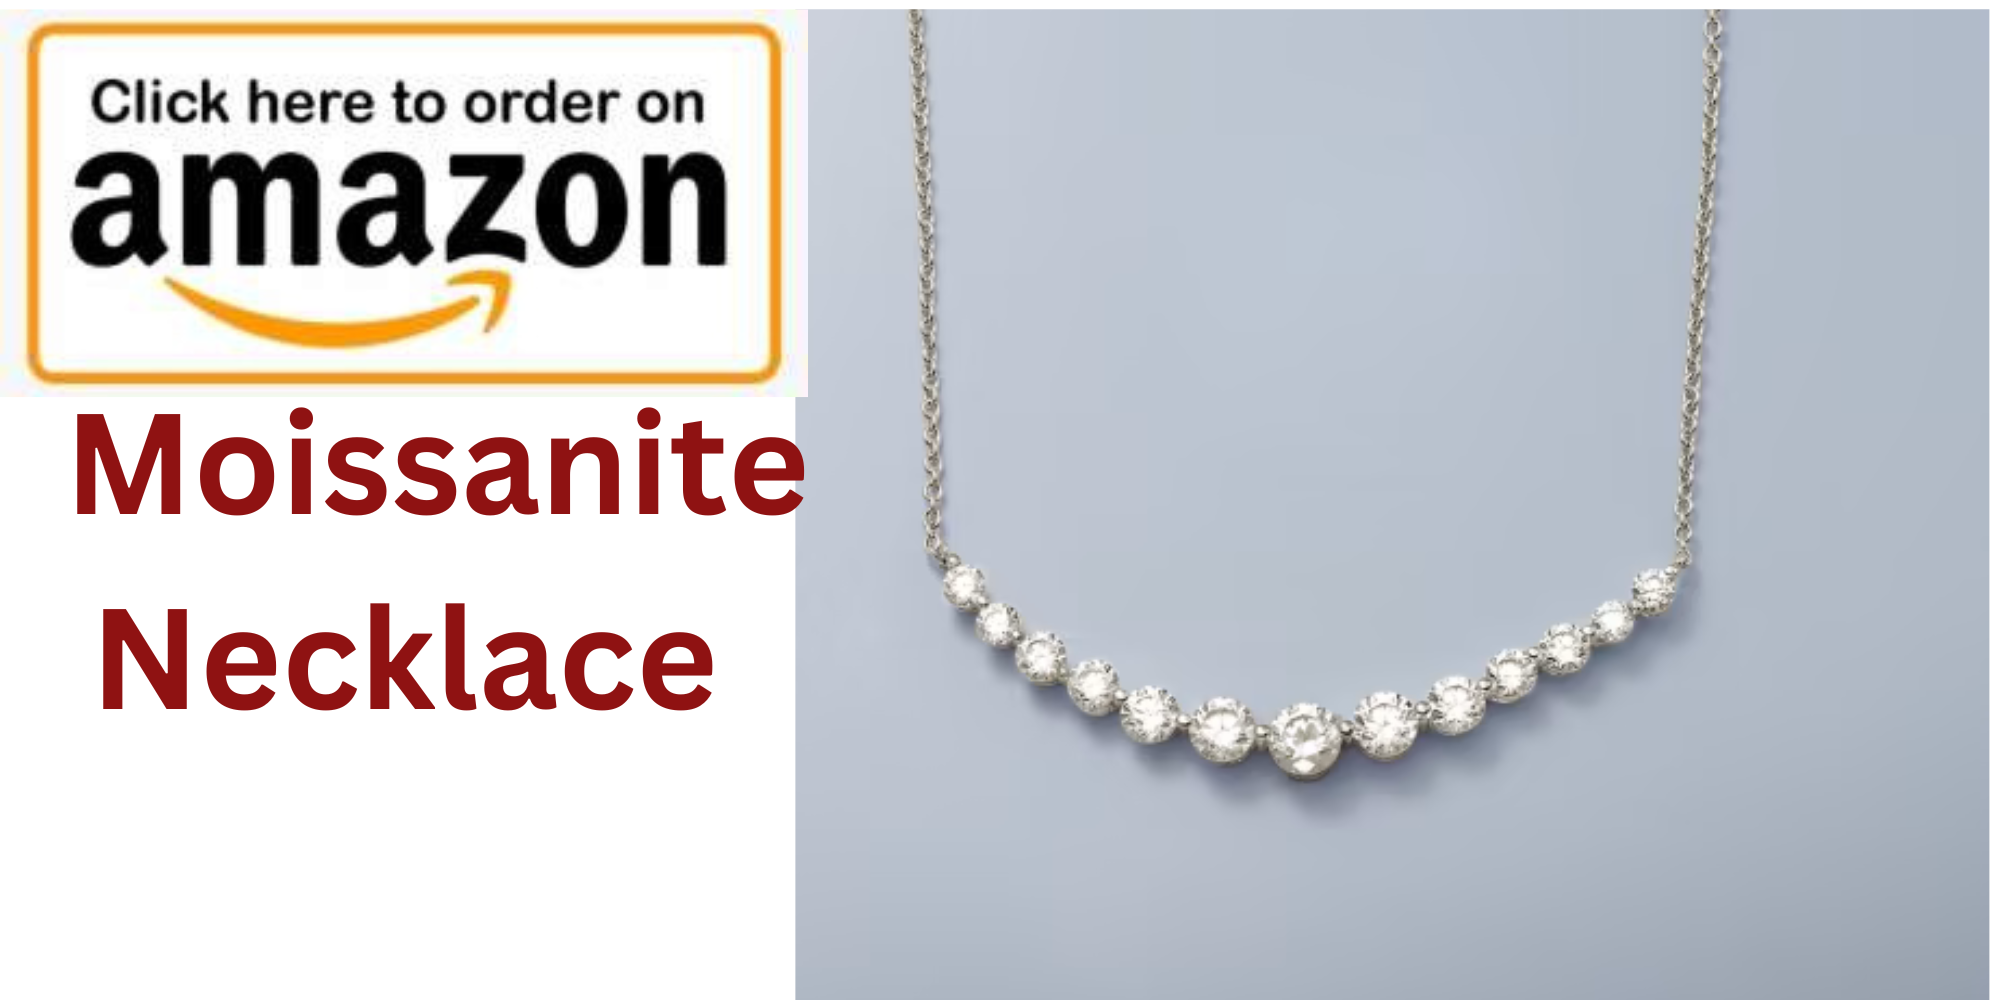 Moissanite Necklace amazon click hear to order